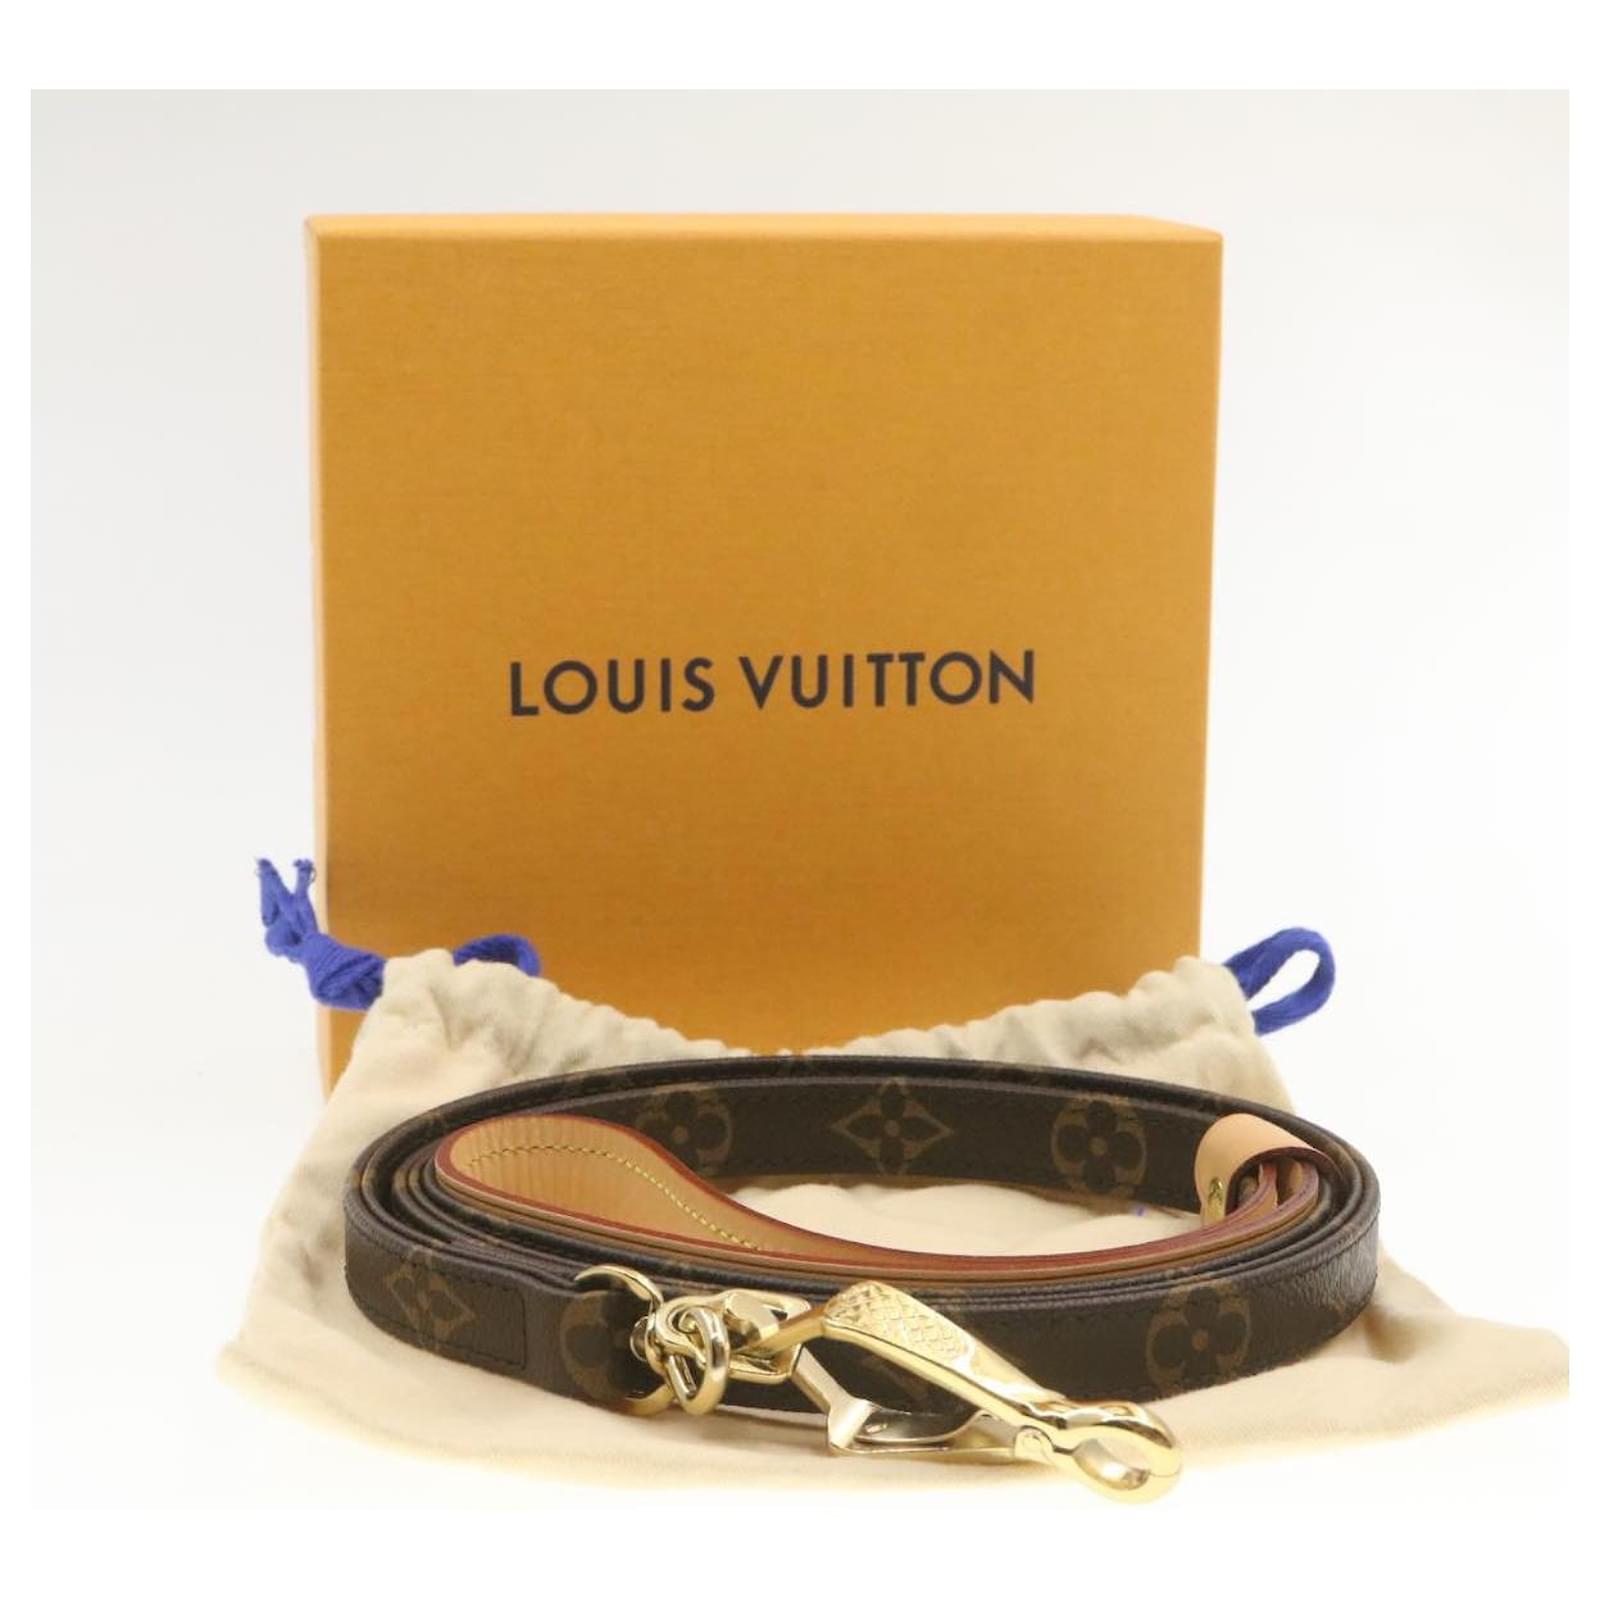 Louis Vuitton, Dog, Louis Vuitton Sac Chien 4 Lv Leash And Baxter Collar